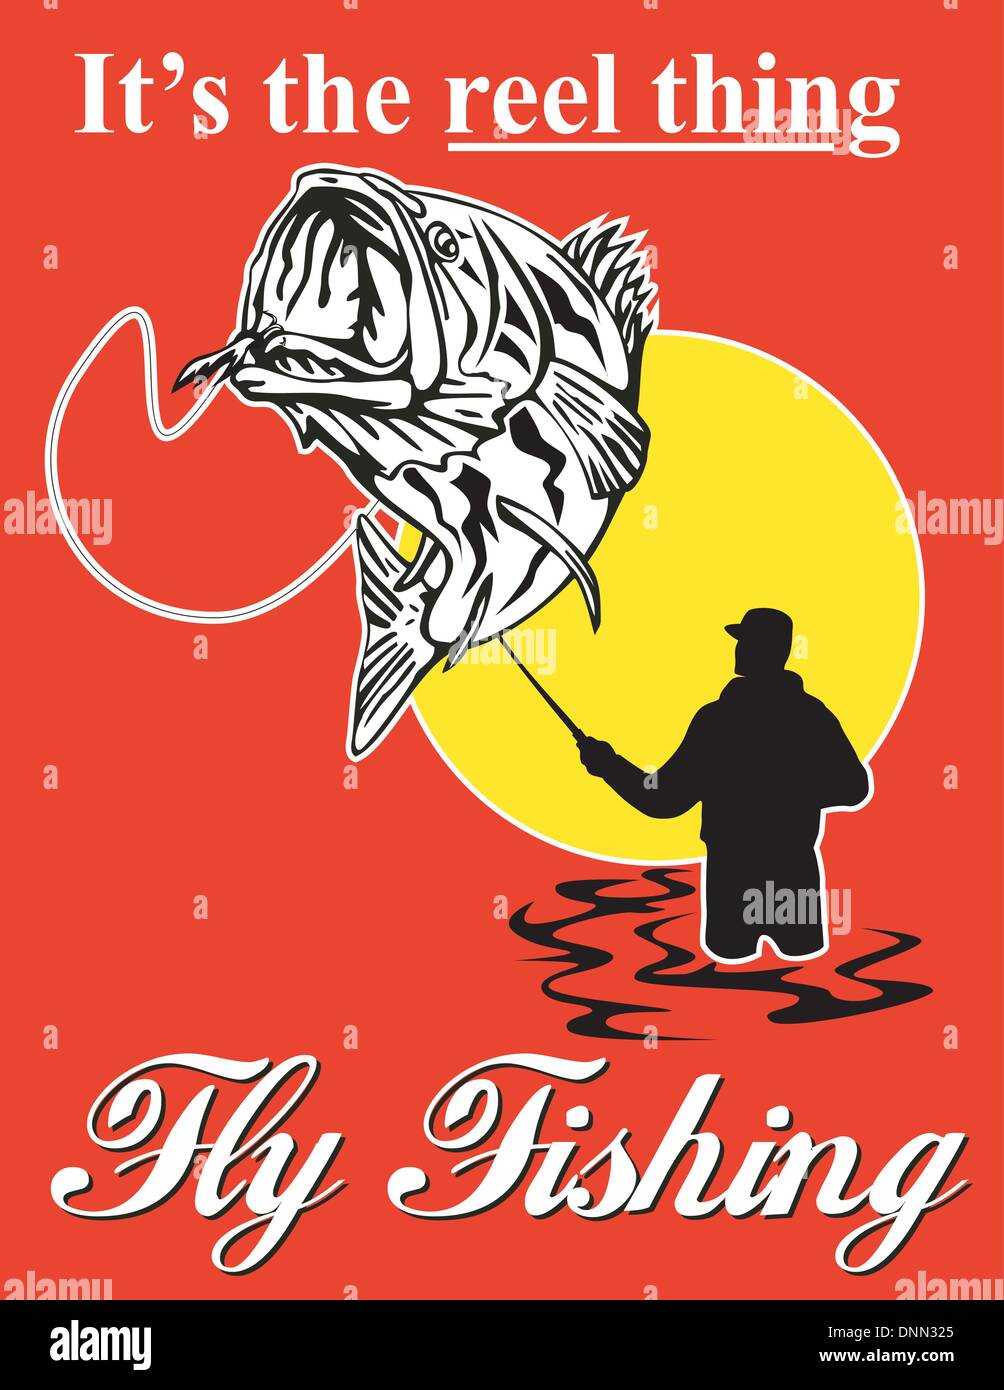 graphic design illustration of ly fisherman catching largemouth